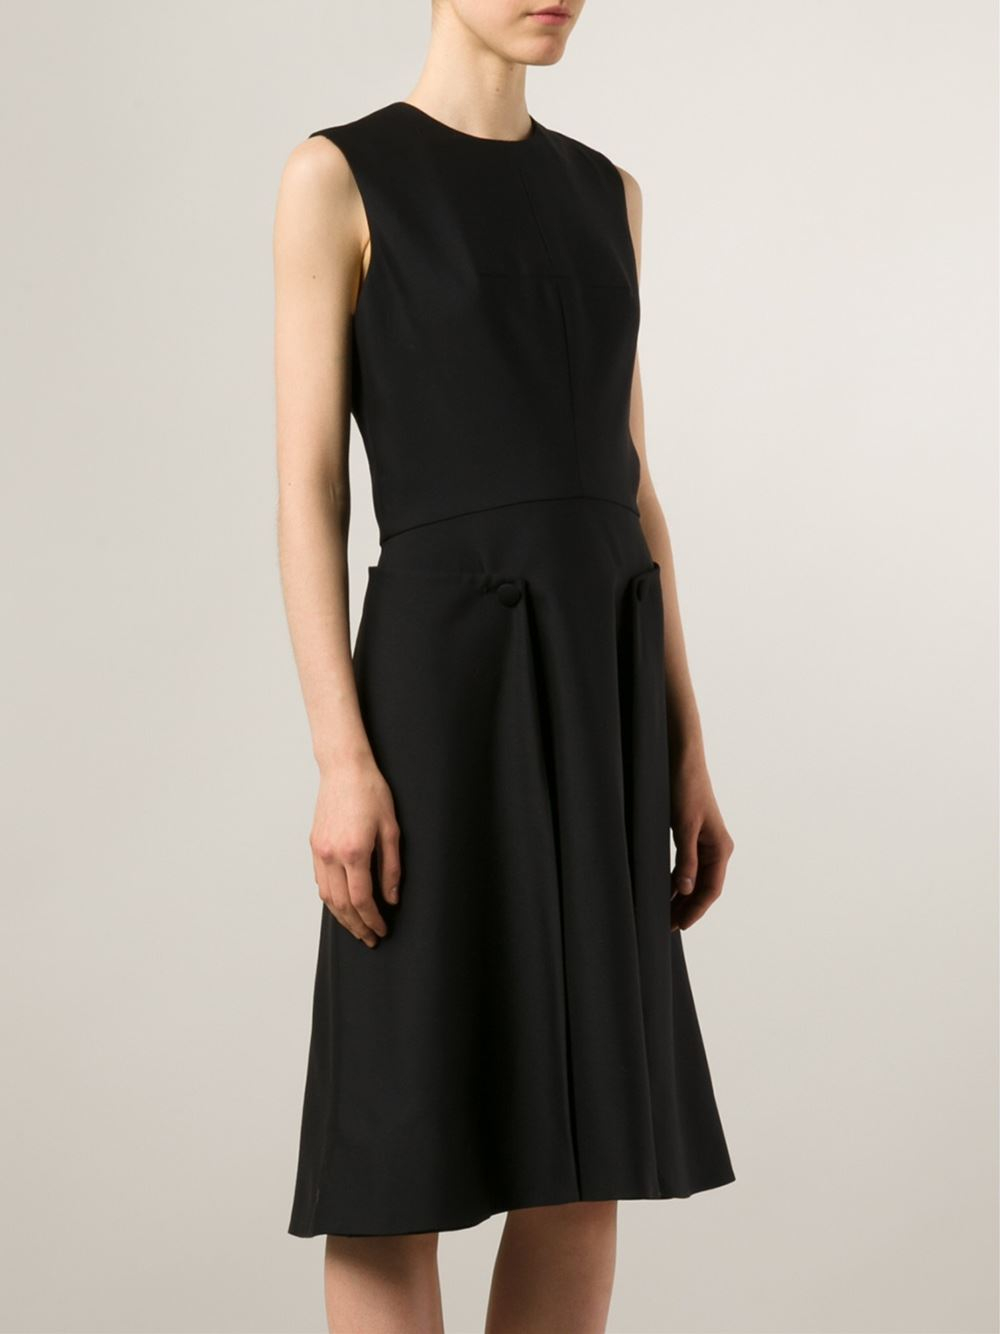 Alexander mcqueen Layered Skirt Dress in Black | Lyst